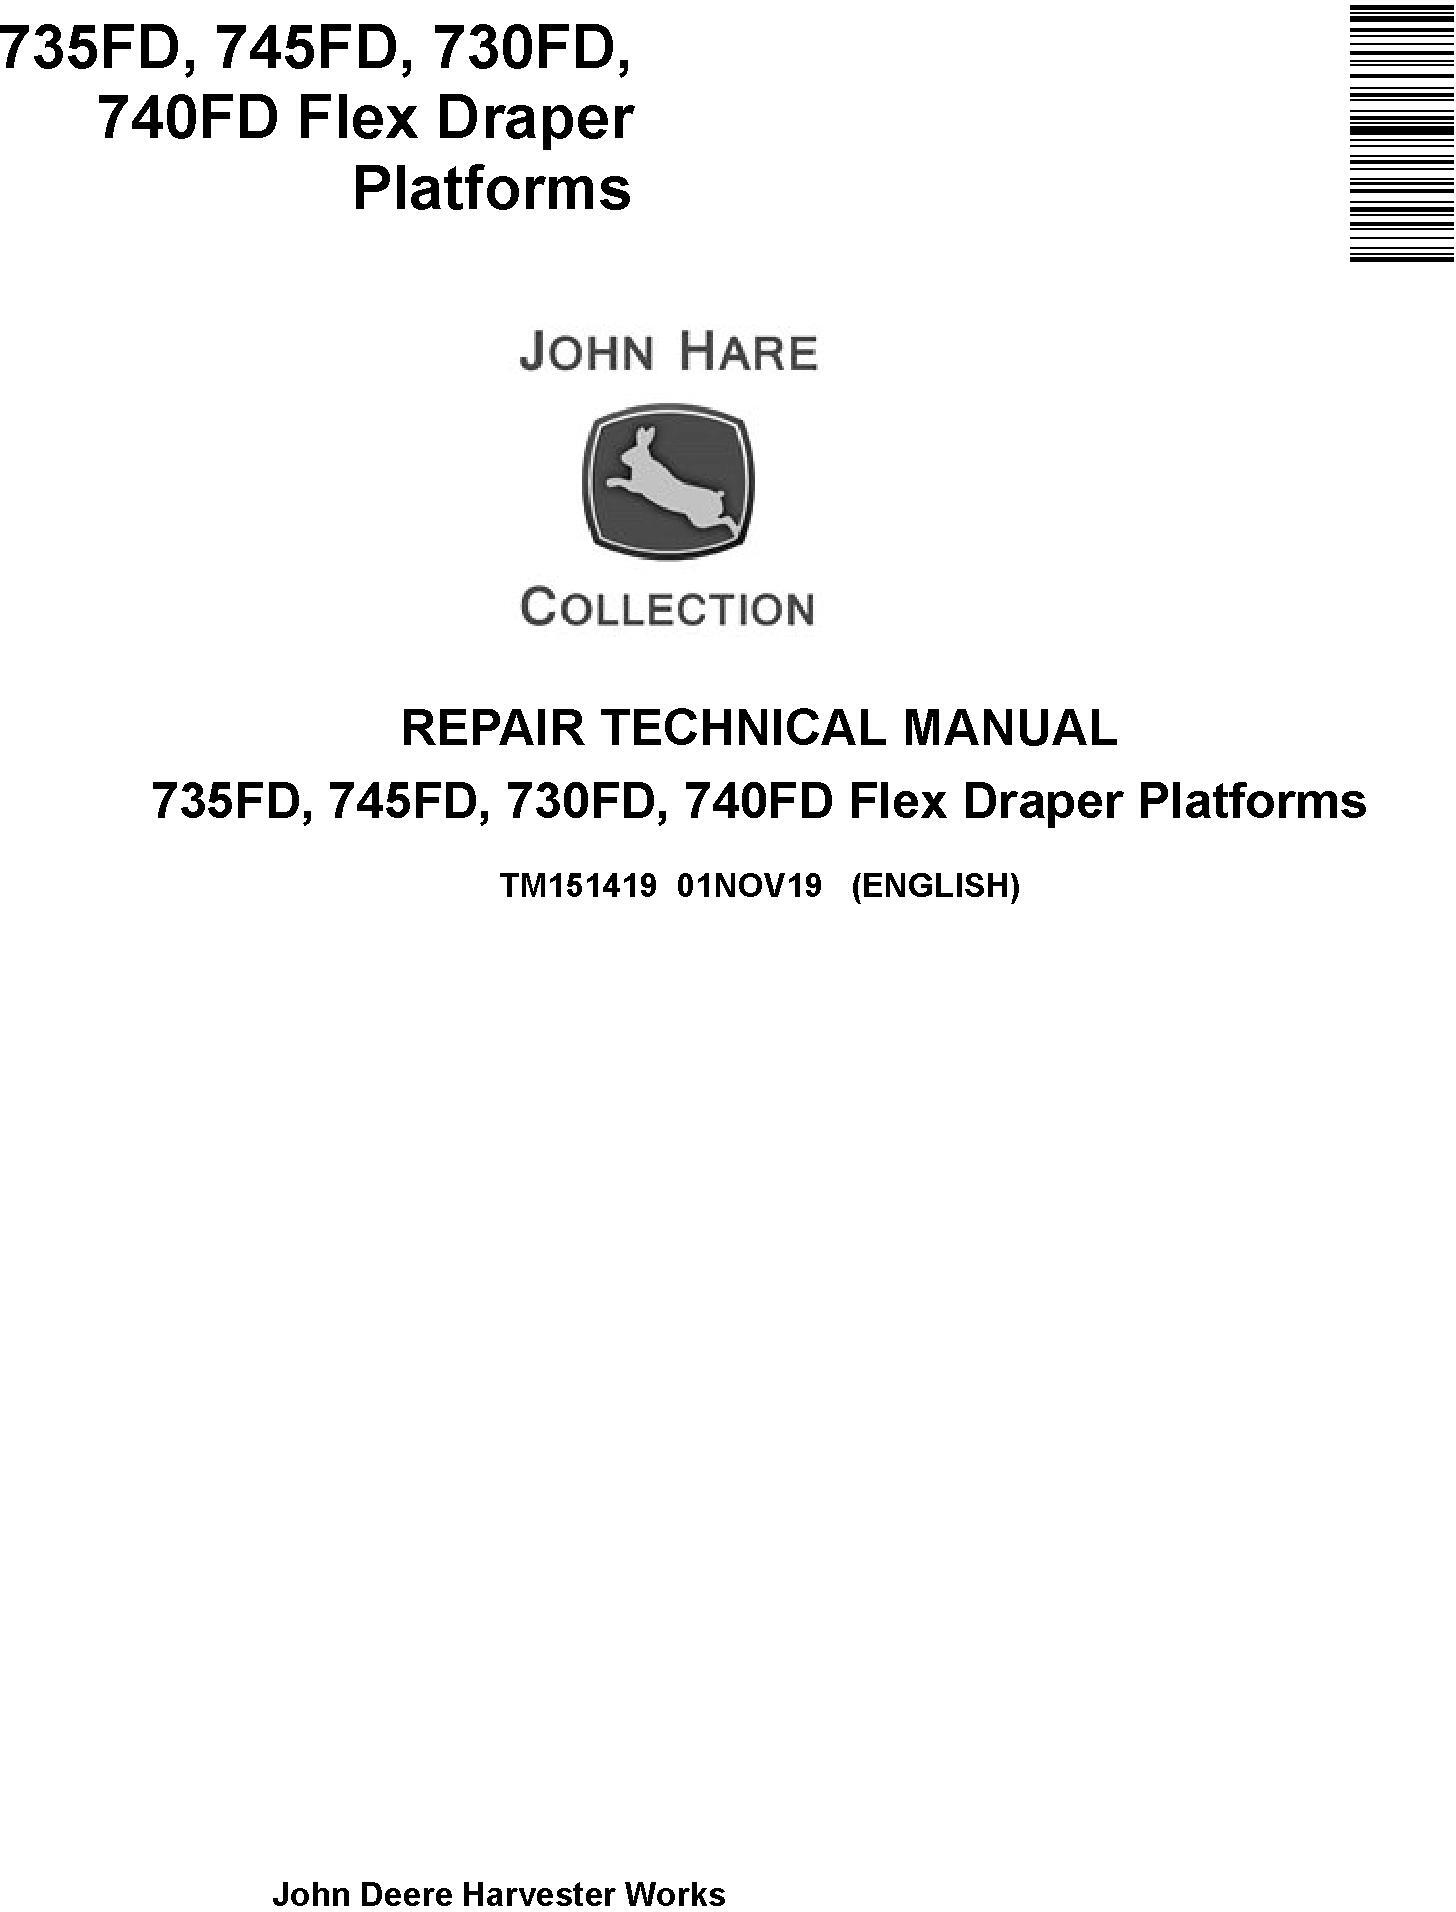 John Deere 735FD to 740FD Flex Draper Platforms Technical Manual TM151419